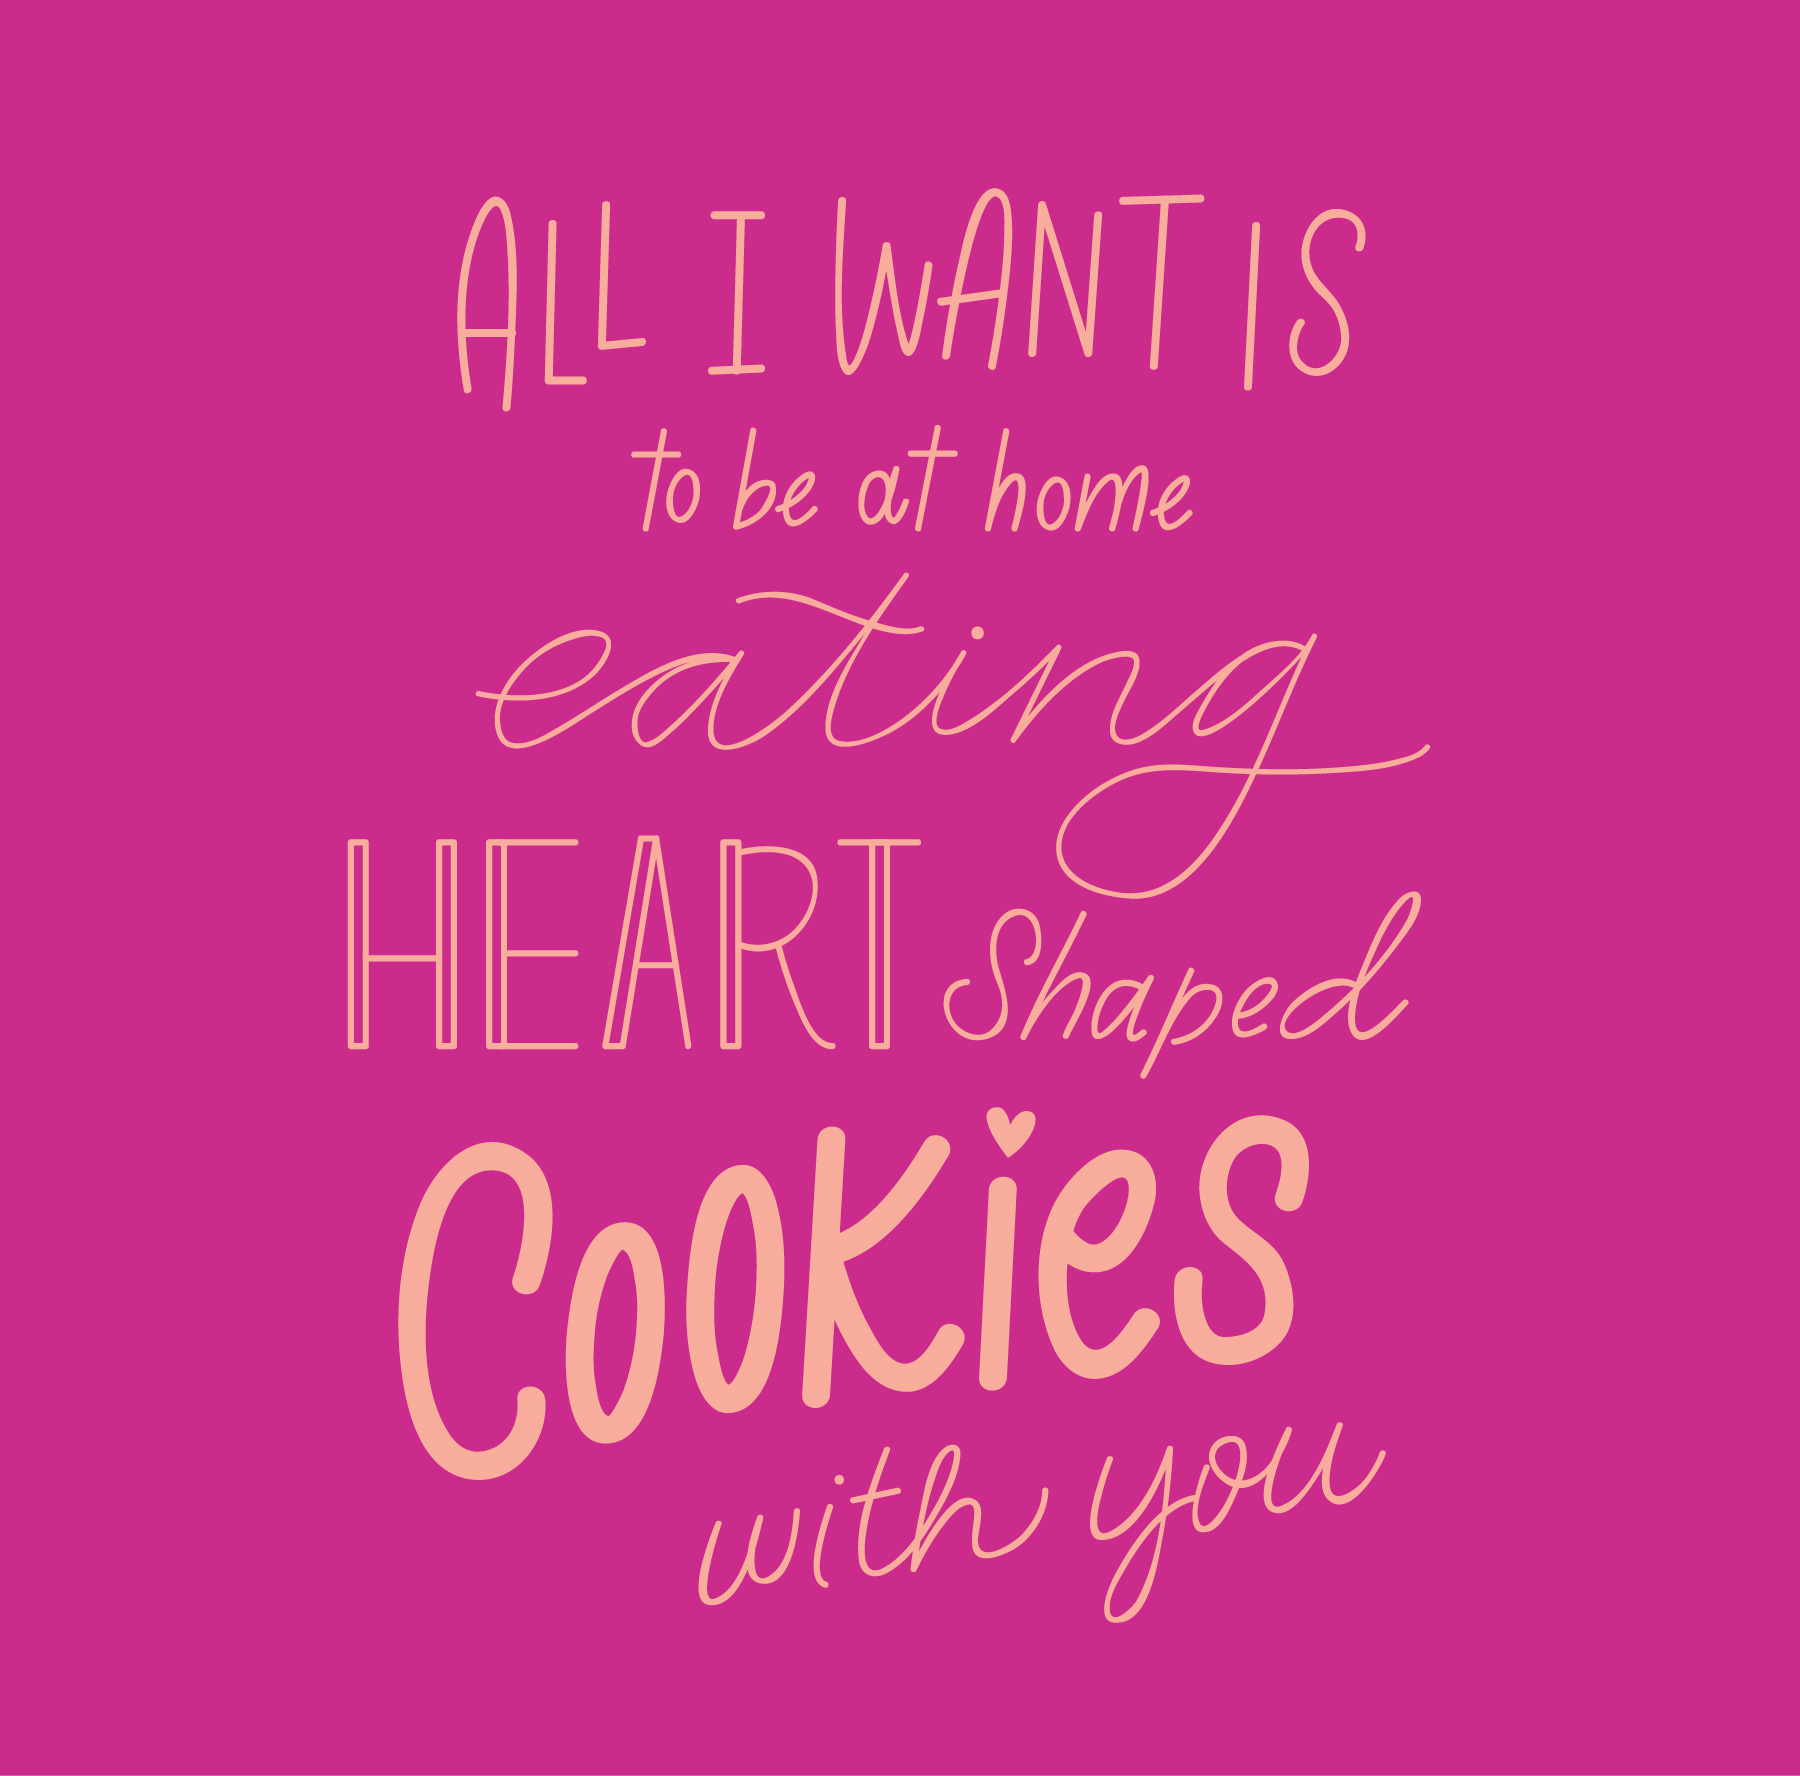 heartcookies2.jpg